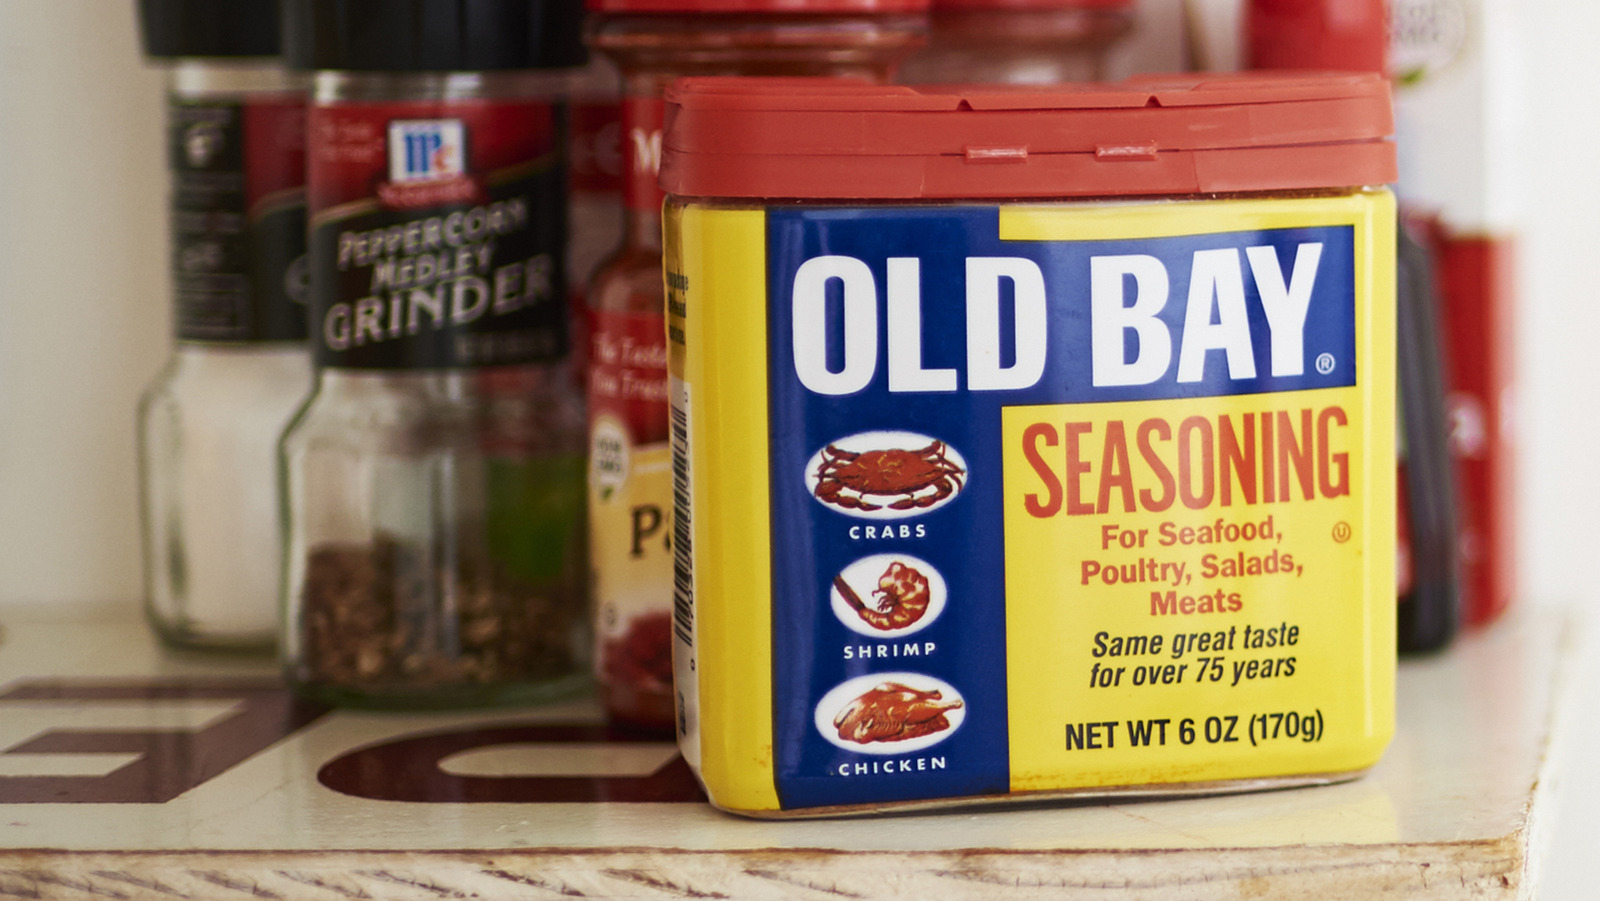 What Is Old Bay Seasoning?